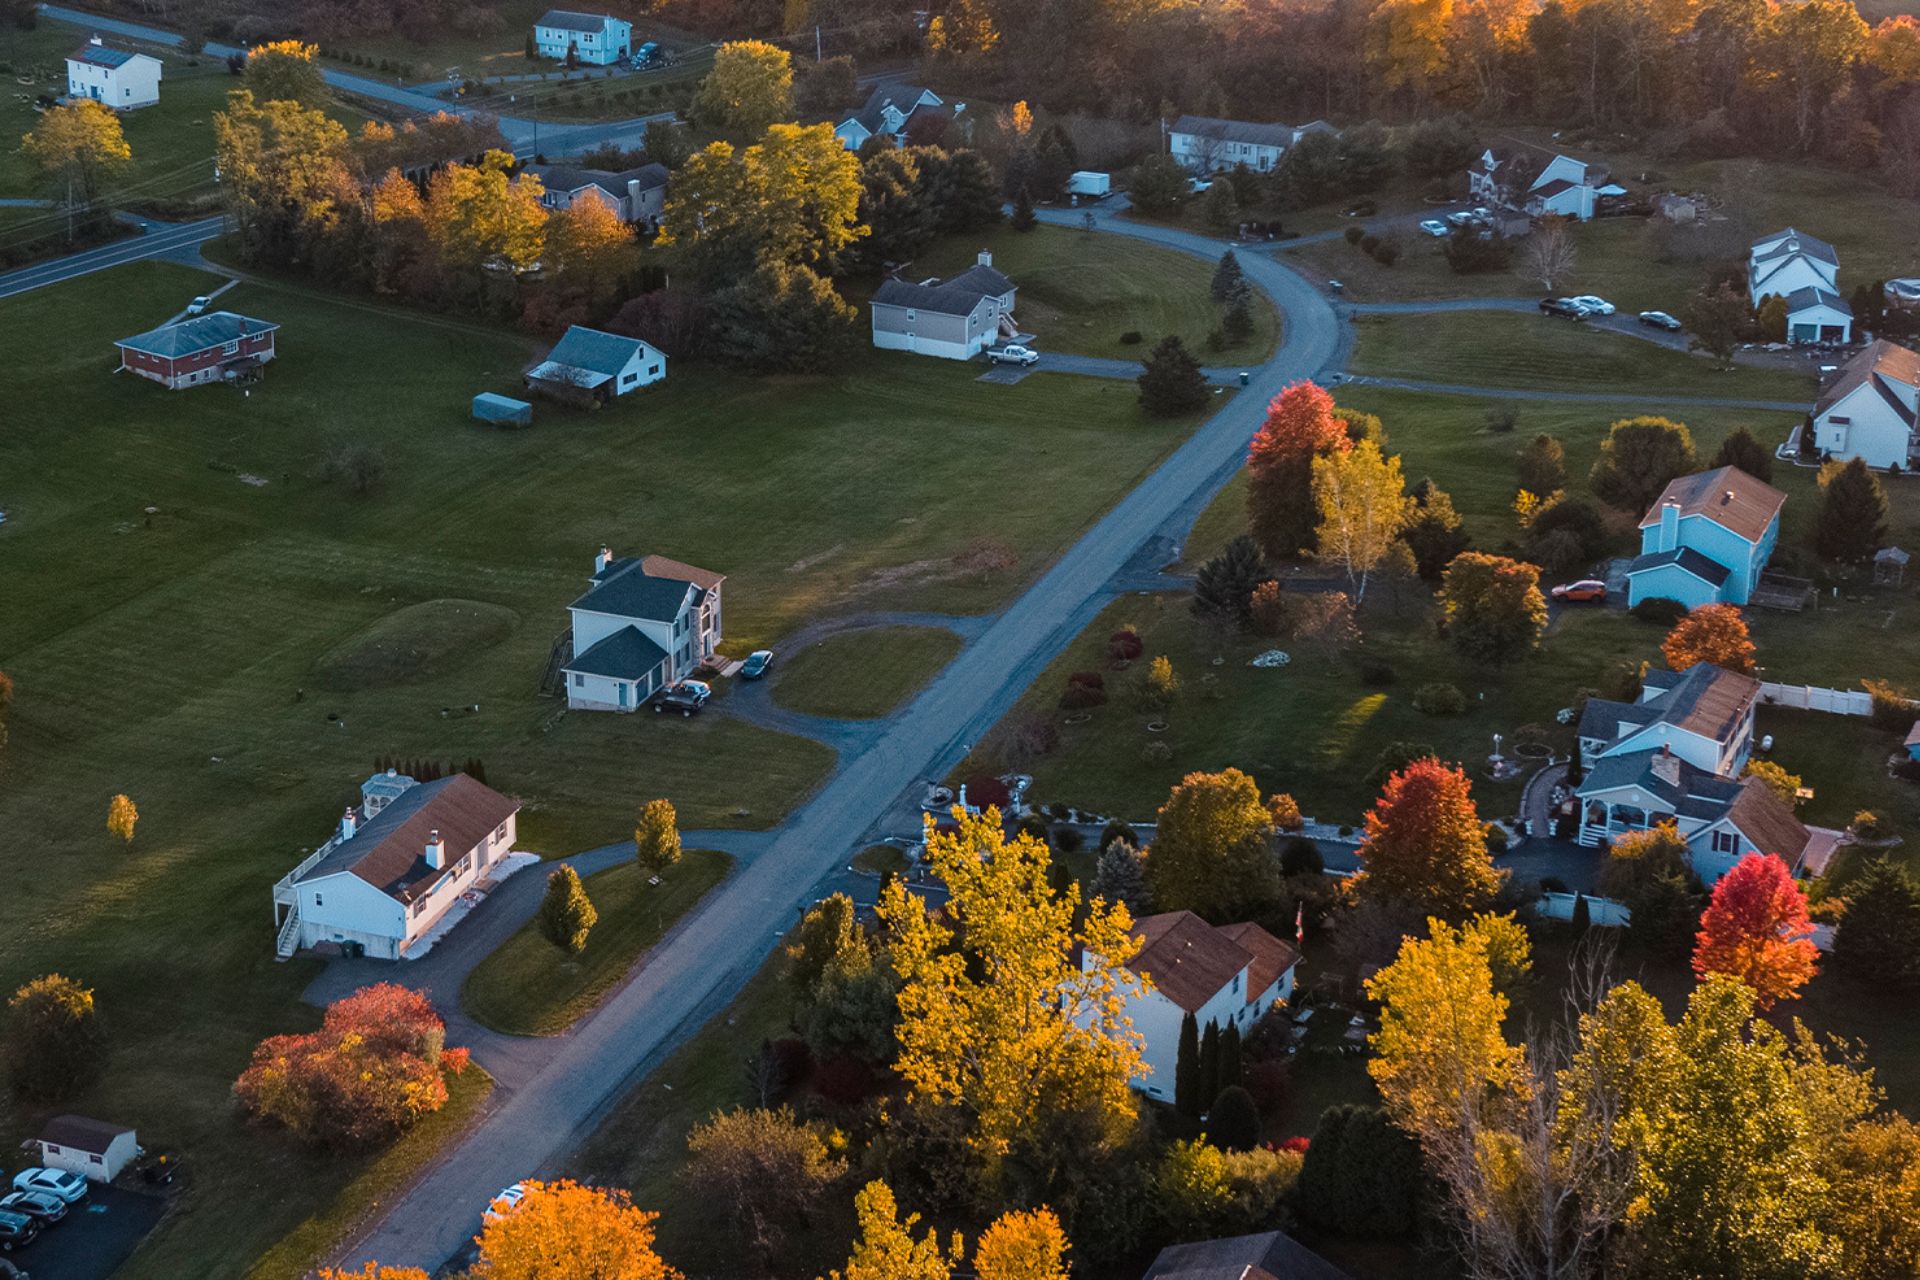 Aerial view of houses in rural community